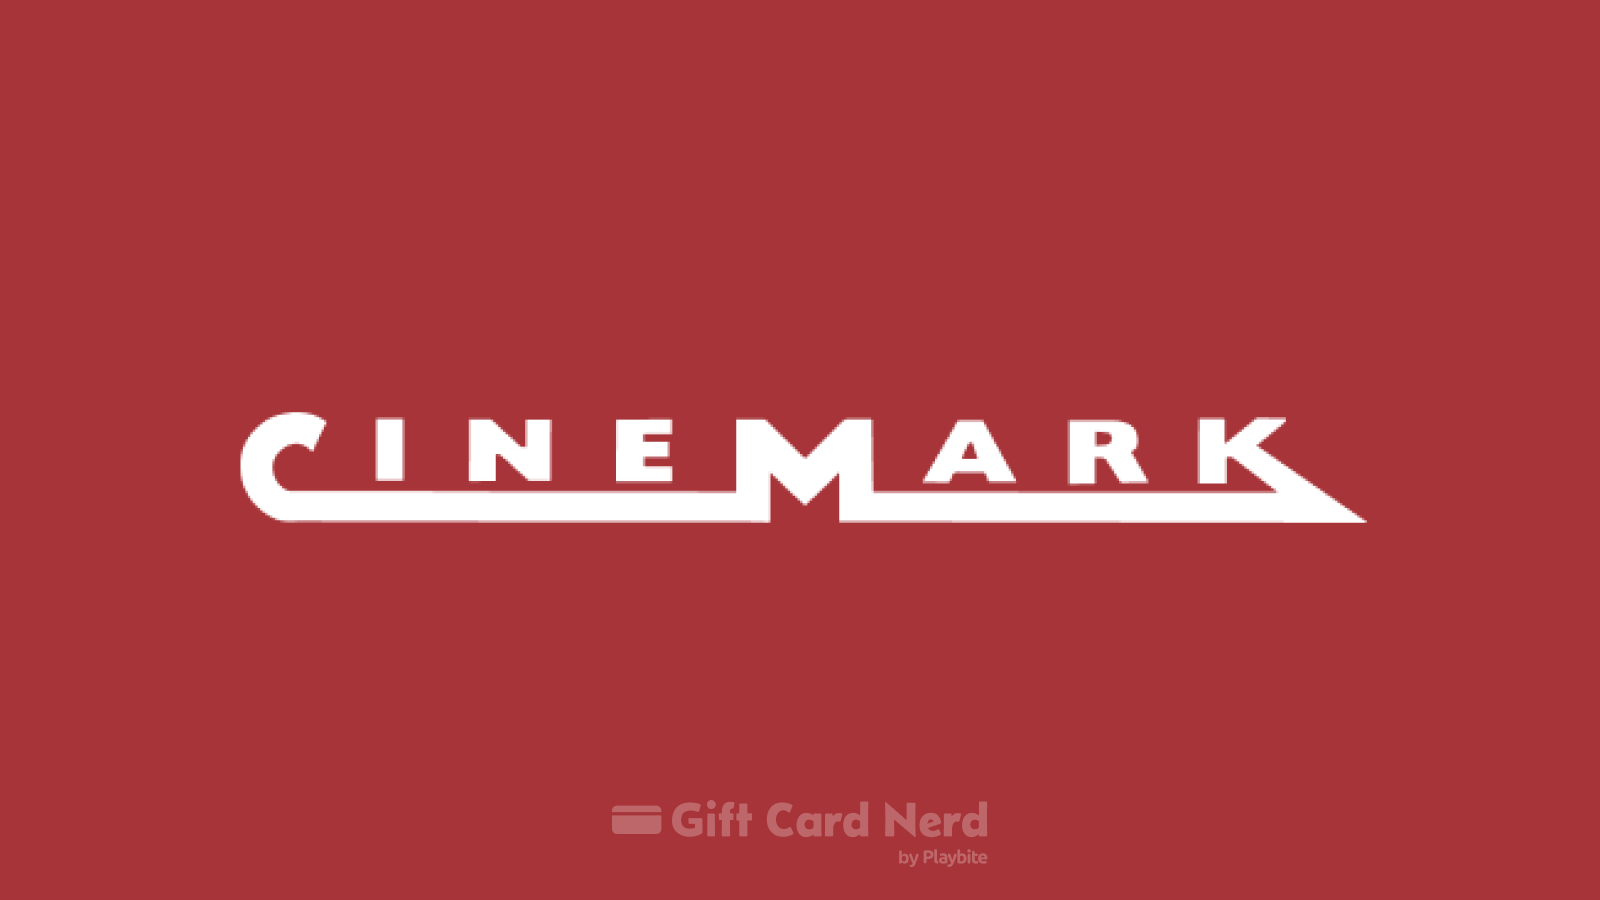 Can You Buy Cinemark Gift Cards on Amazon?